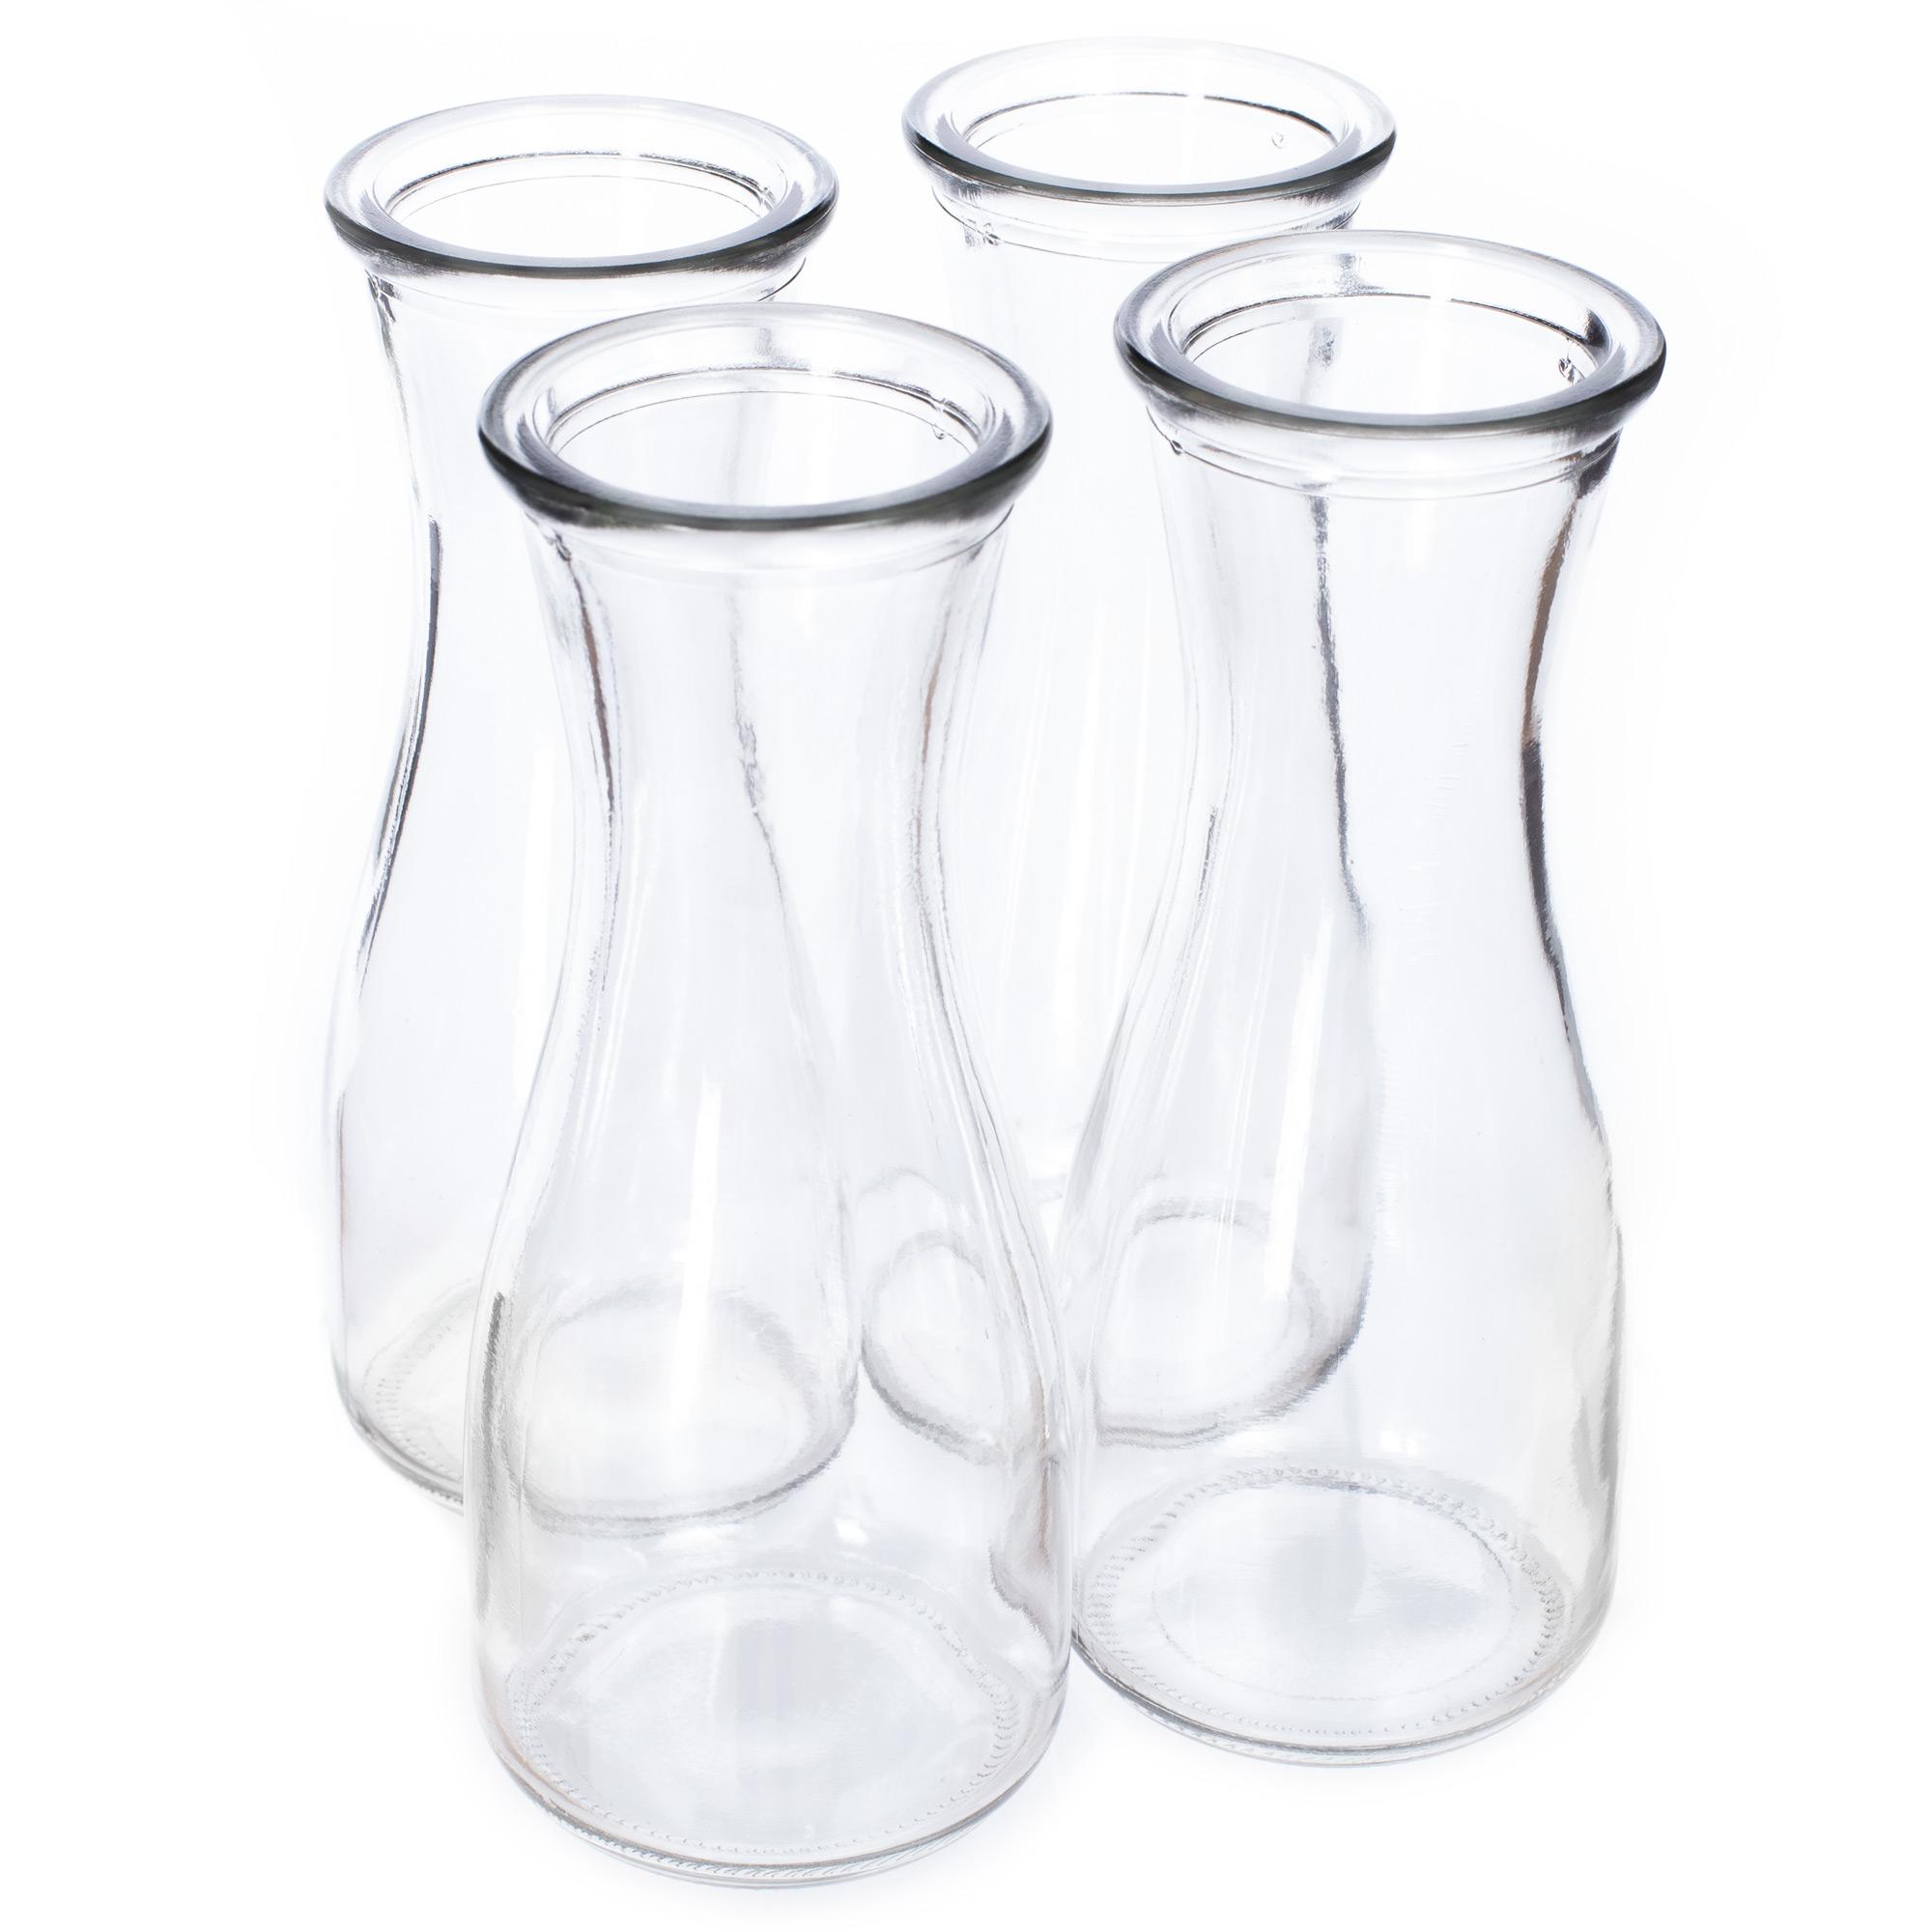 Glass Carafe, 350 mL, 4-pack